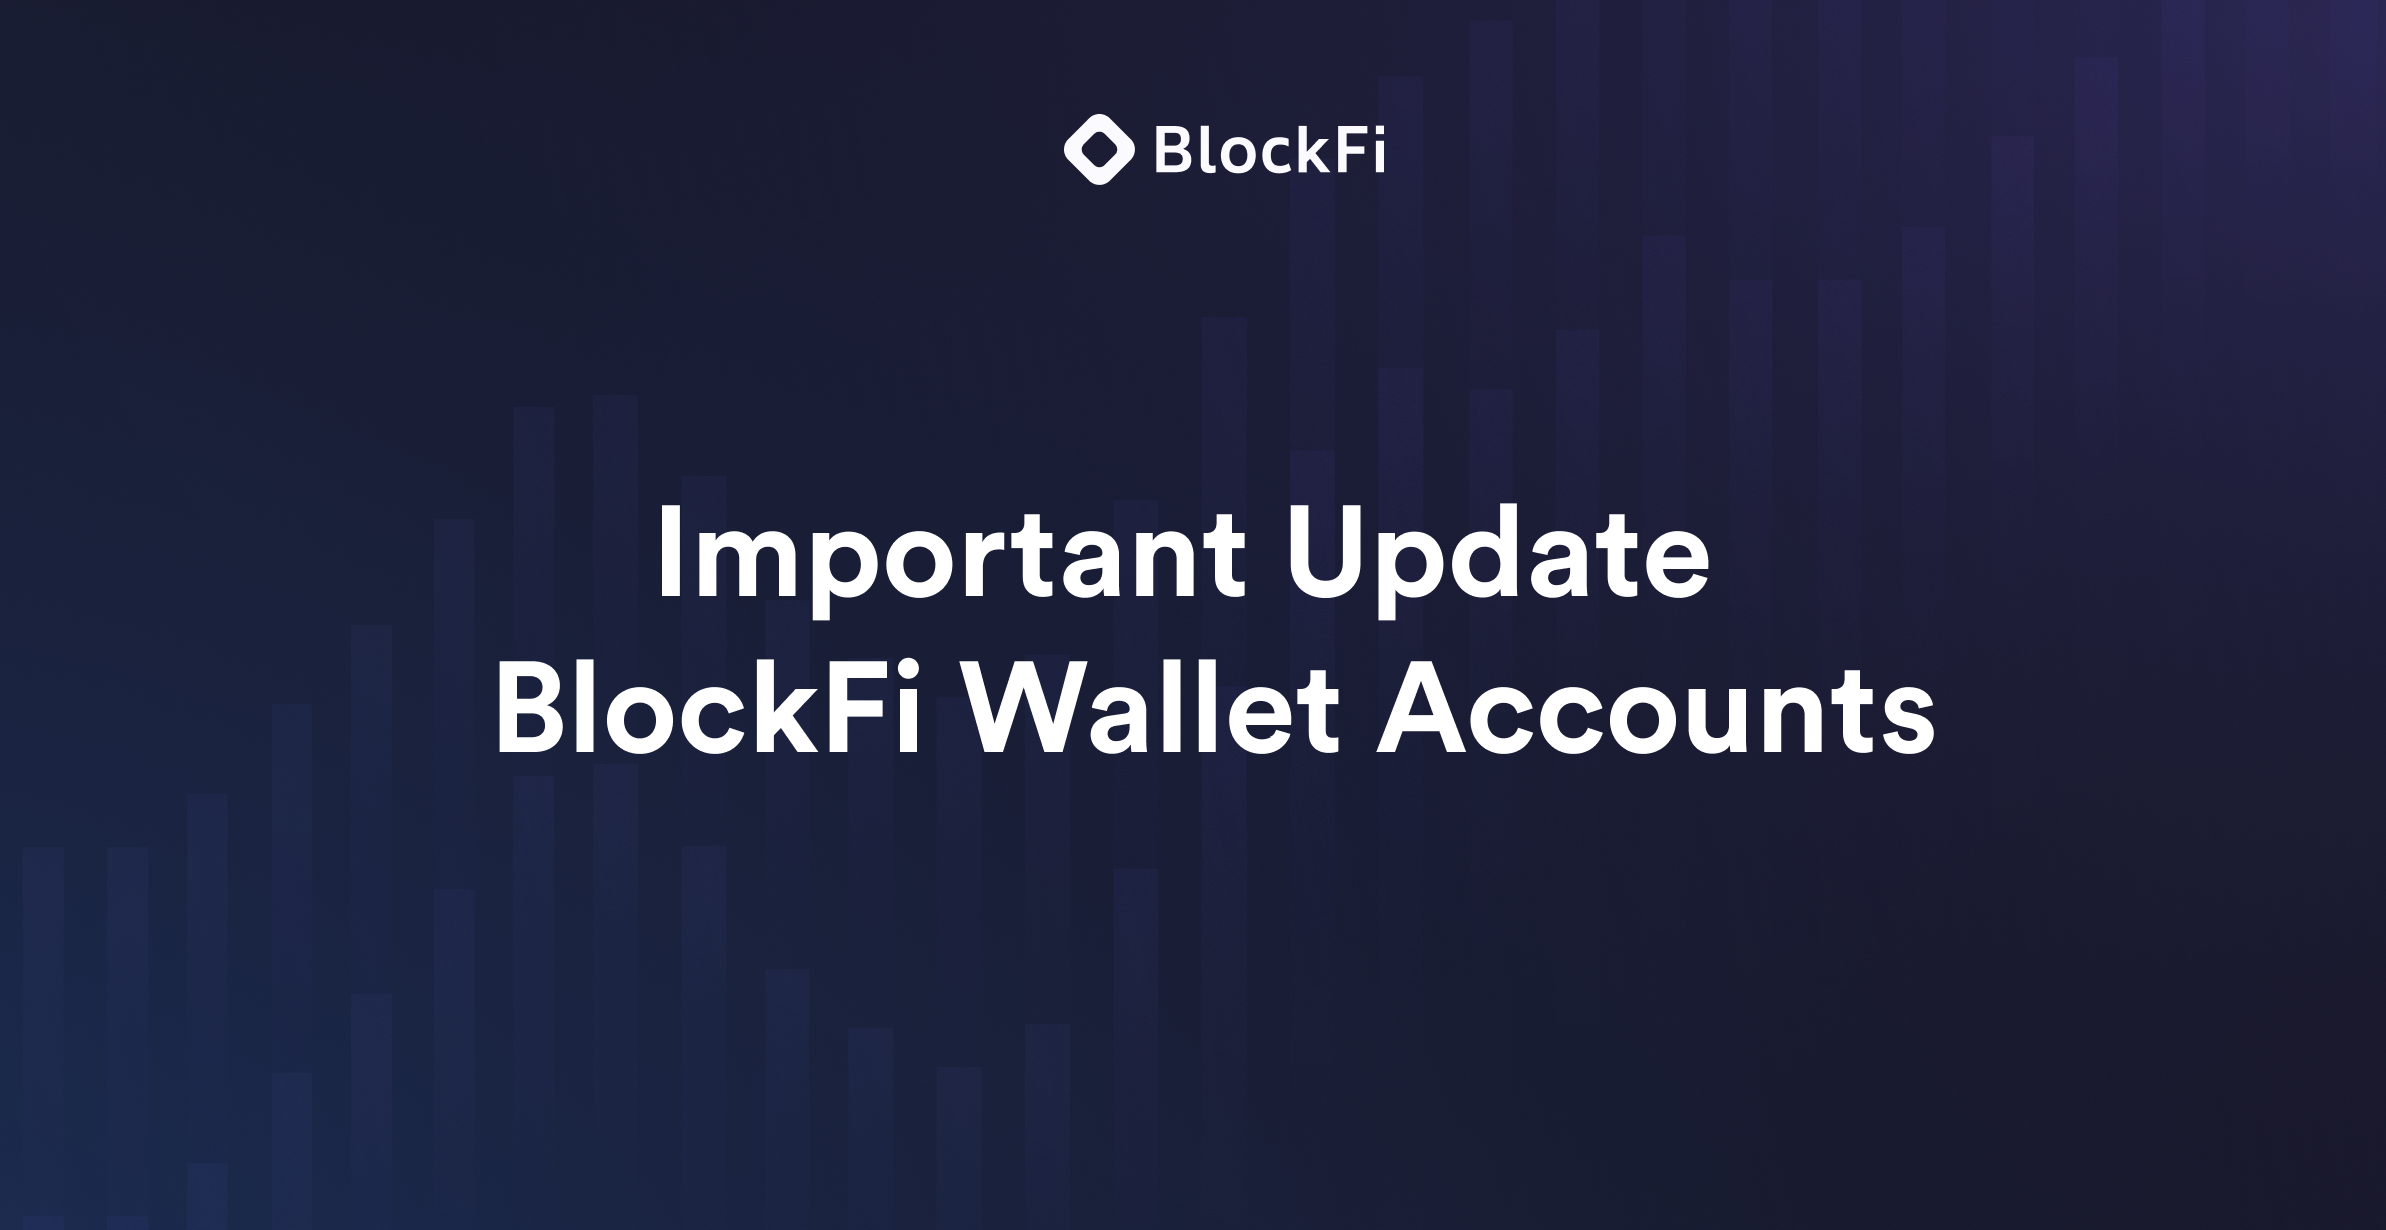  Important Update - BlockFi Wallet Accounts 